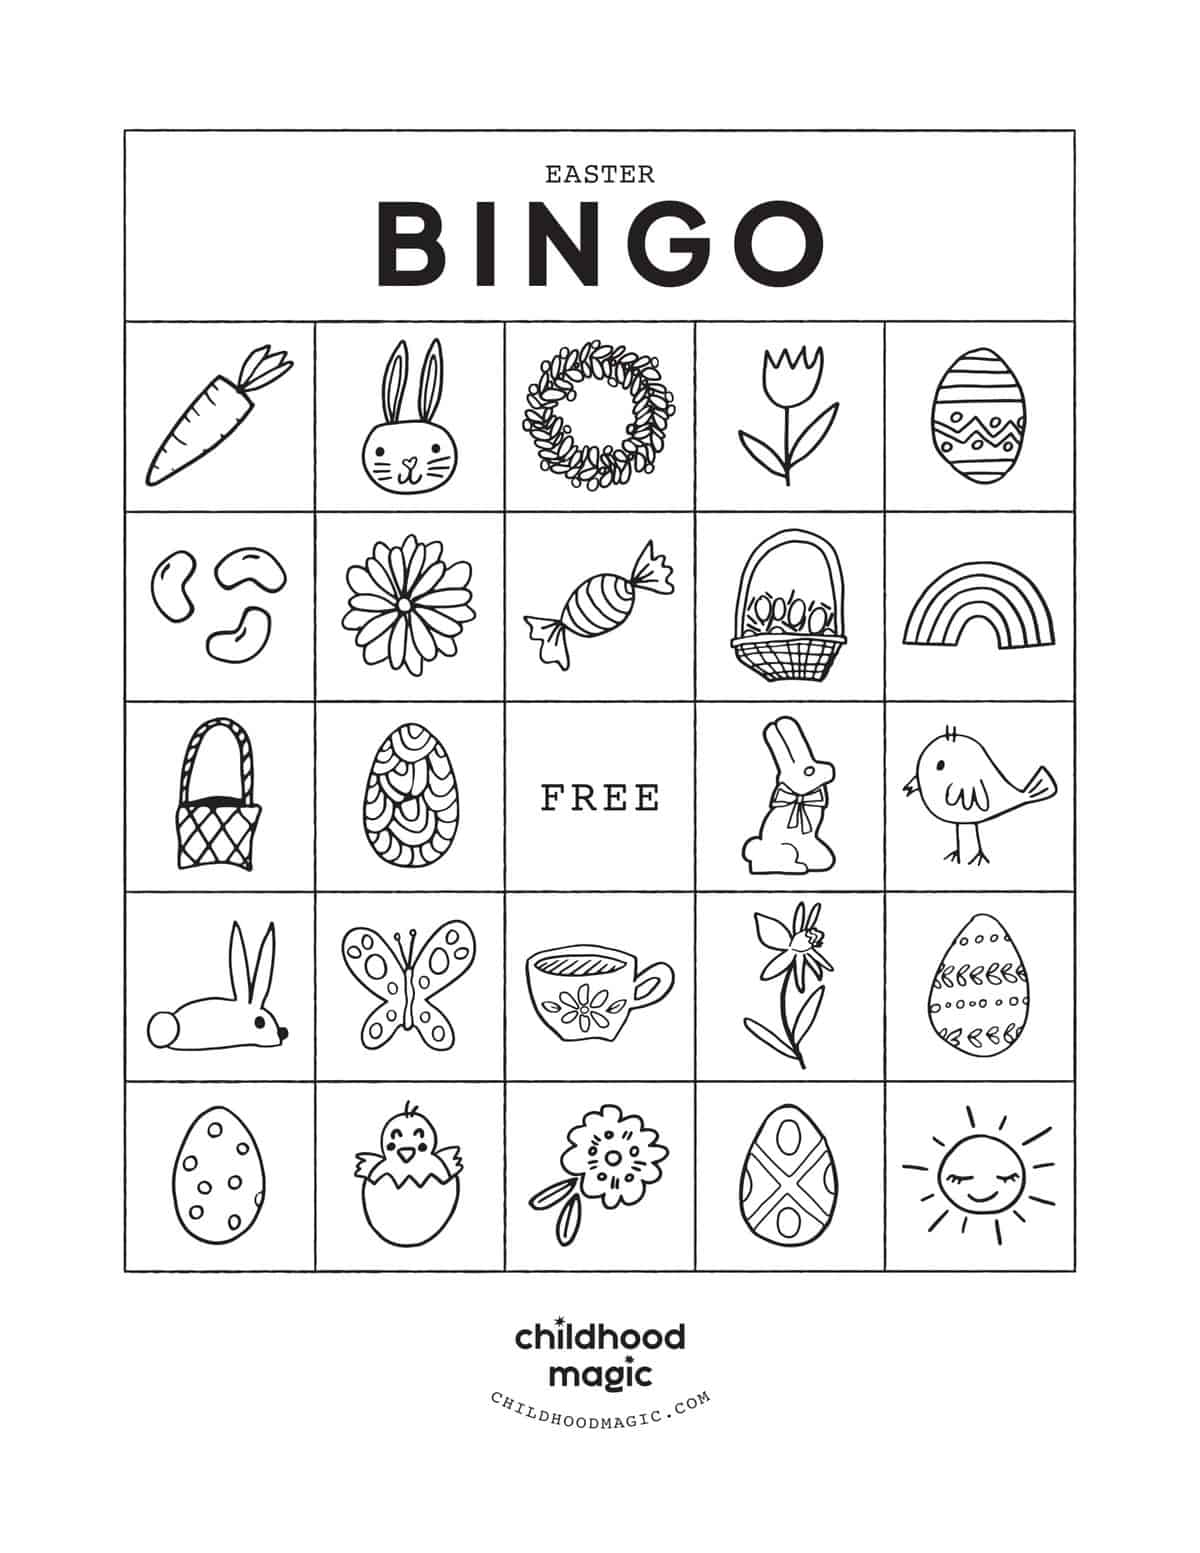 Printable bingo card in black and white. 